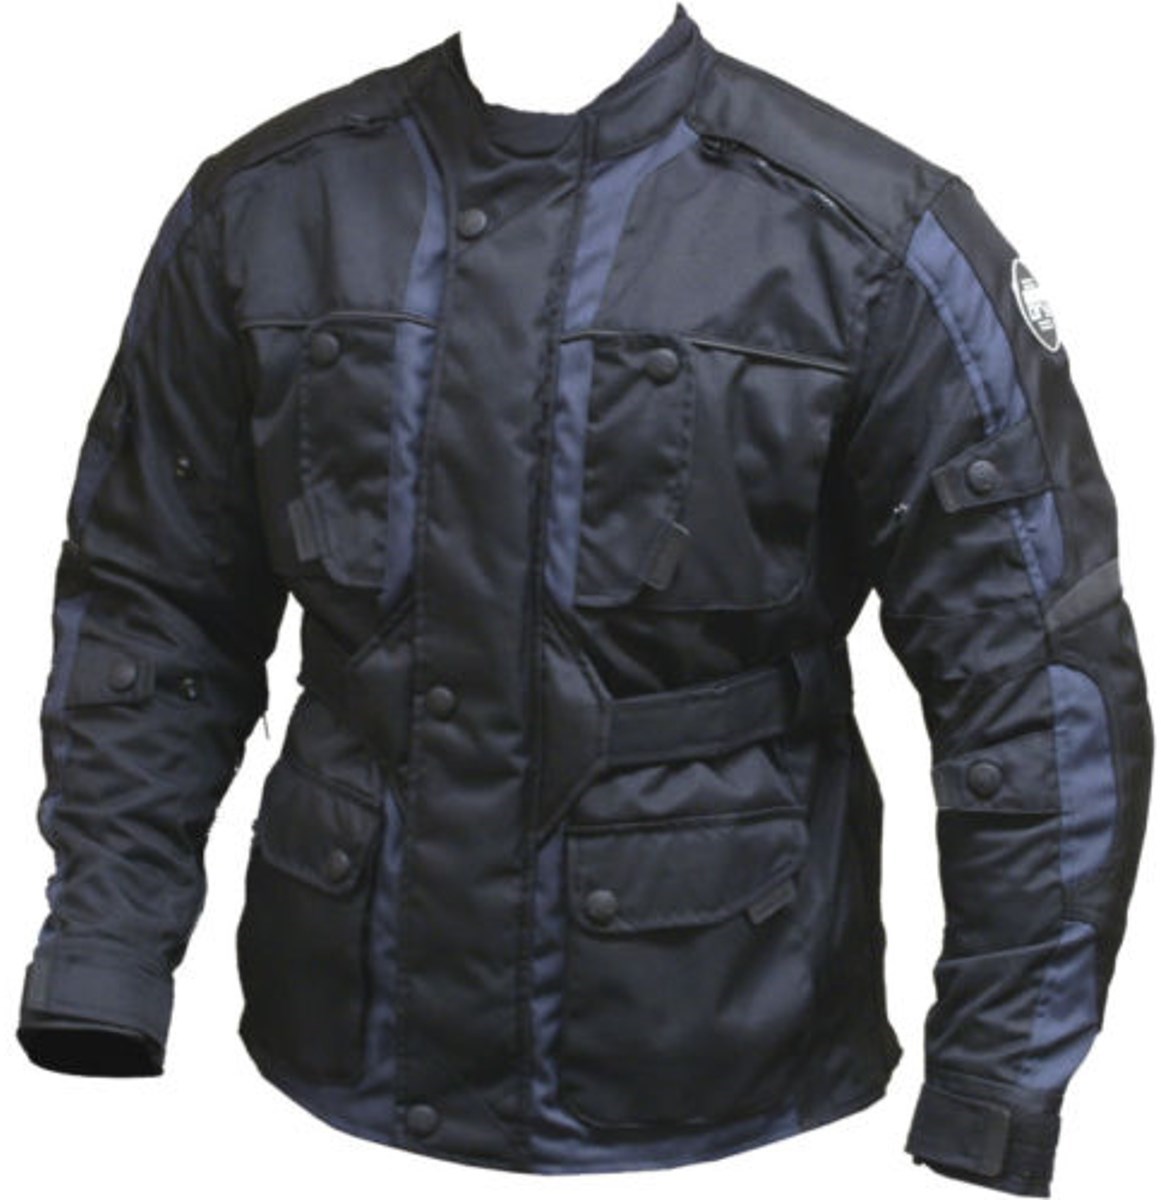 Oxford Bone Dry Switch Waterproof Motorcycle Jacket product image